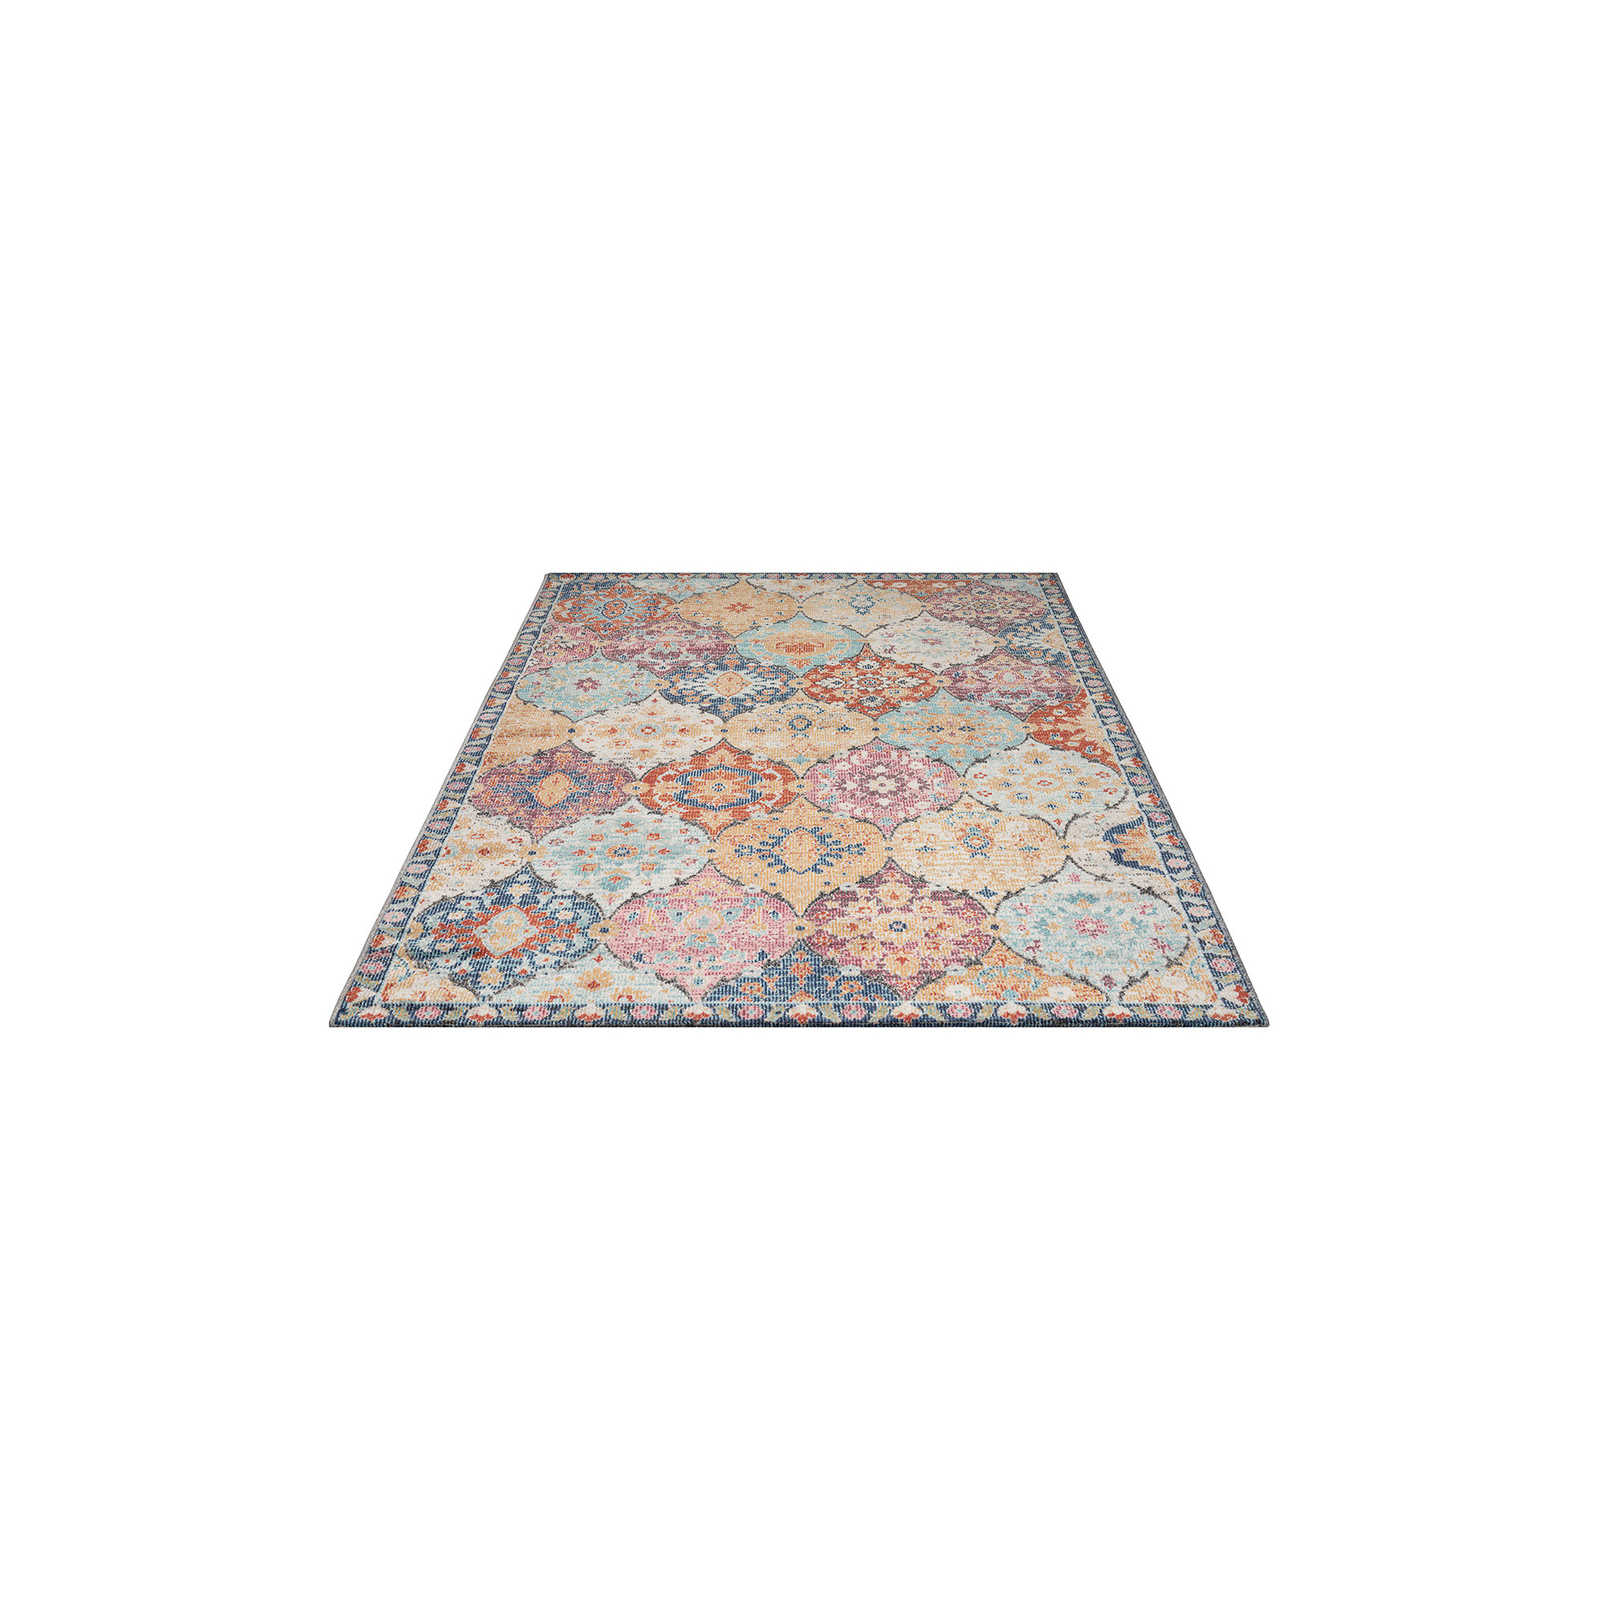 Bunter Outdoor Teppich aus Flachgewebe – 200 x 140 cm
